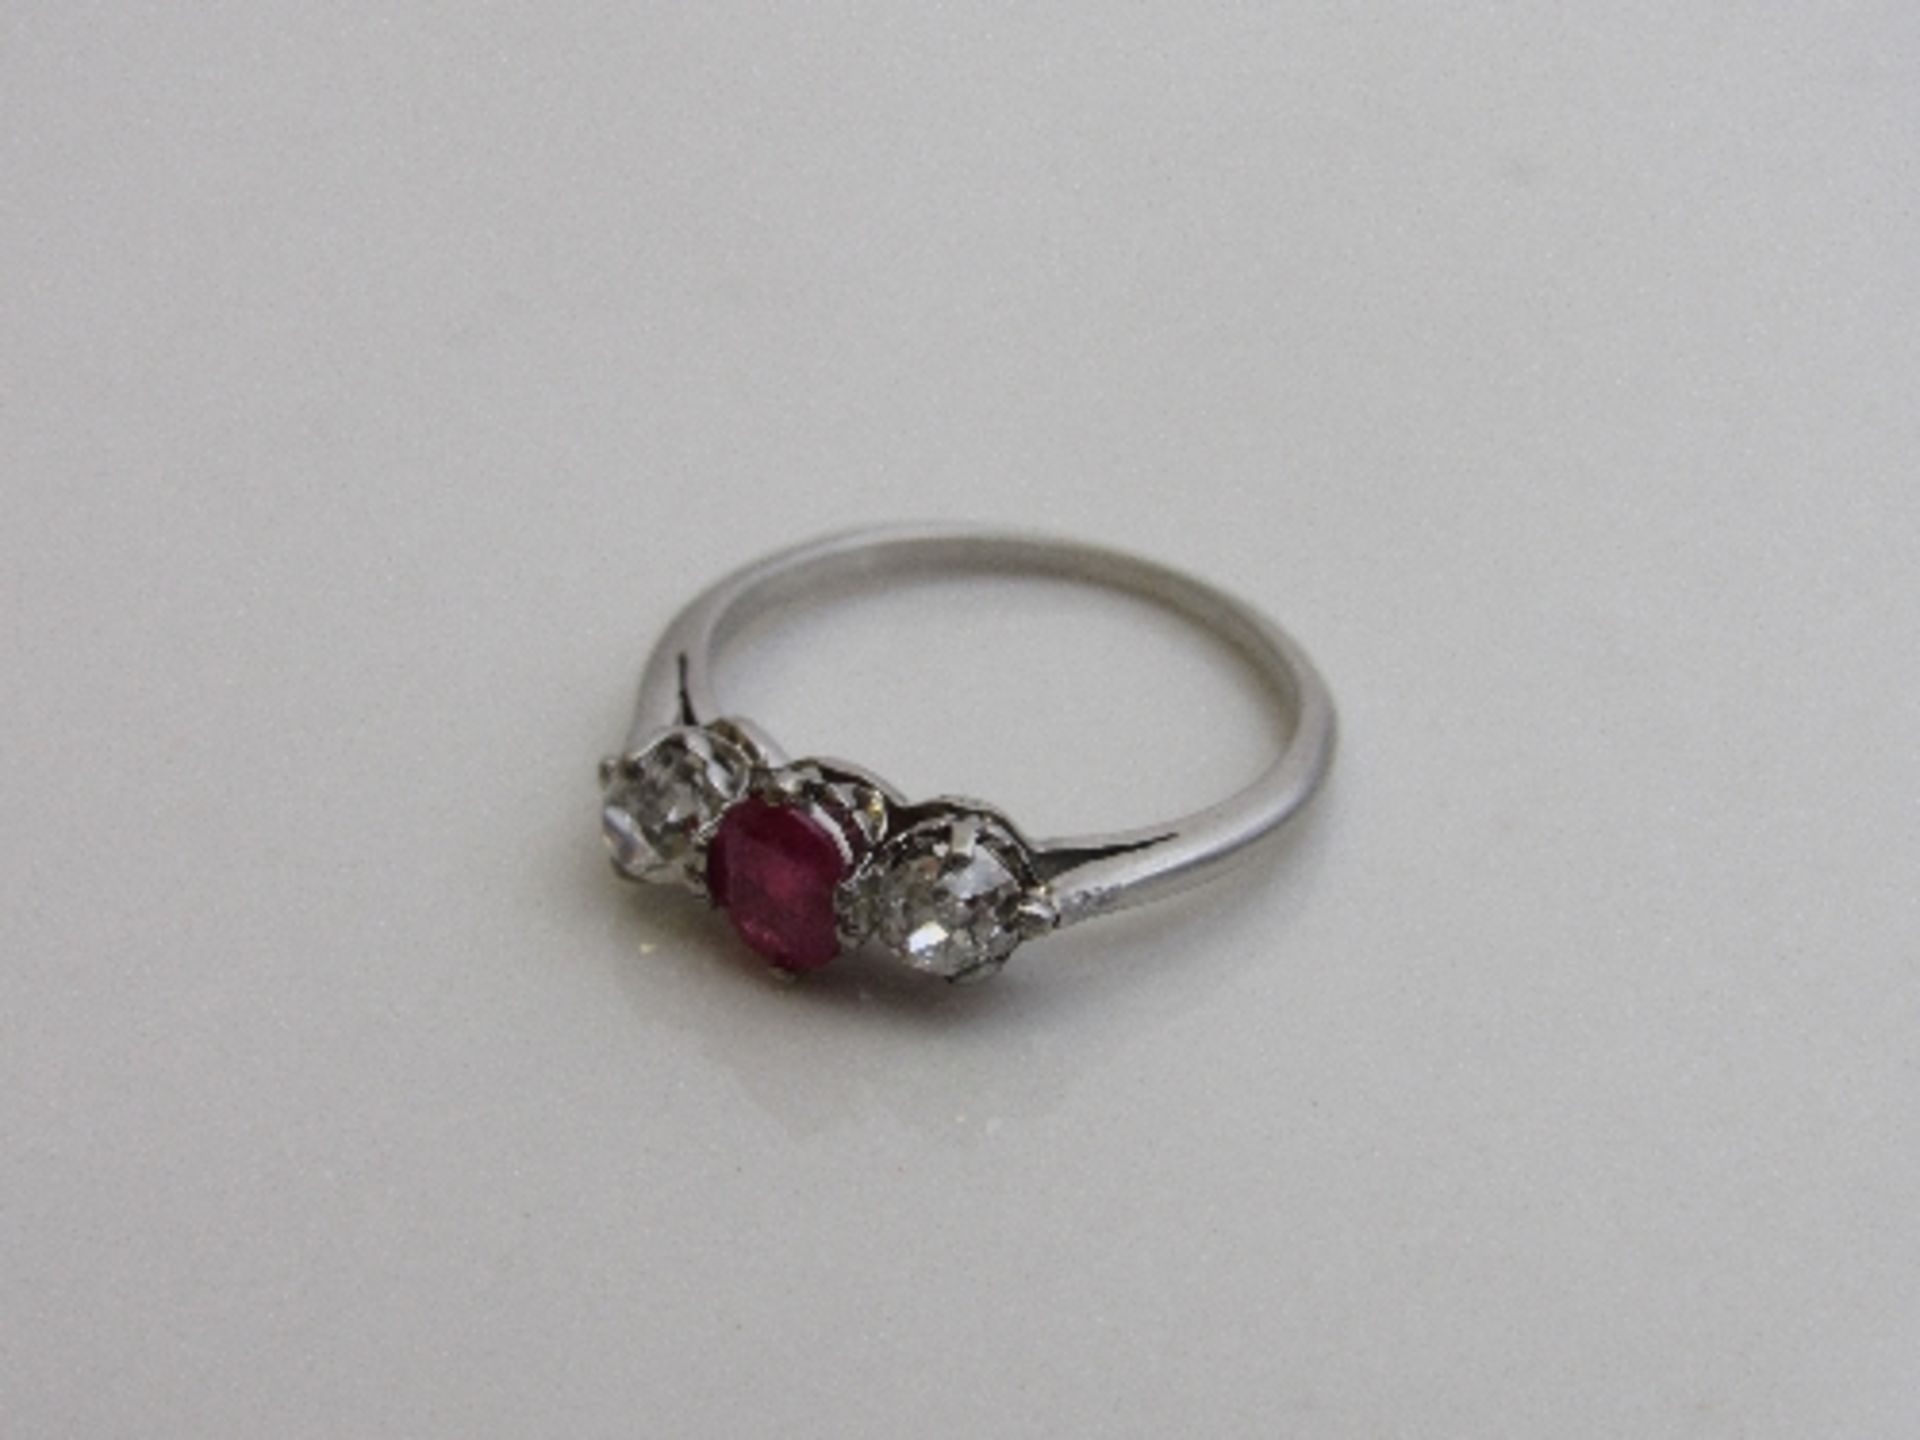 Platinum, diamond & ruby ring, size J 1/2, weight 2.3gms. Estimate £450-480 - Image 2 of 4